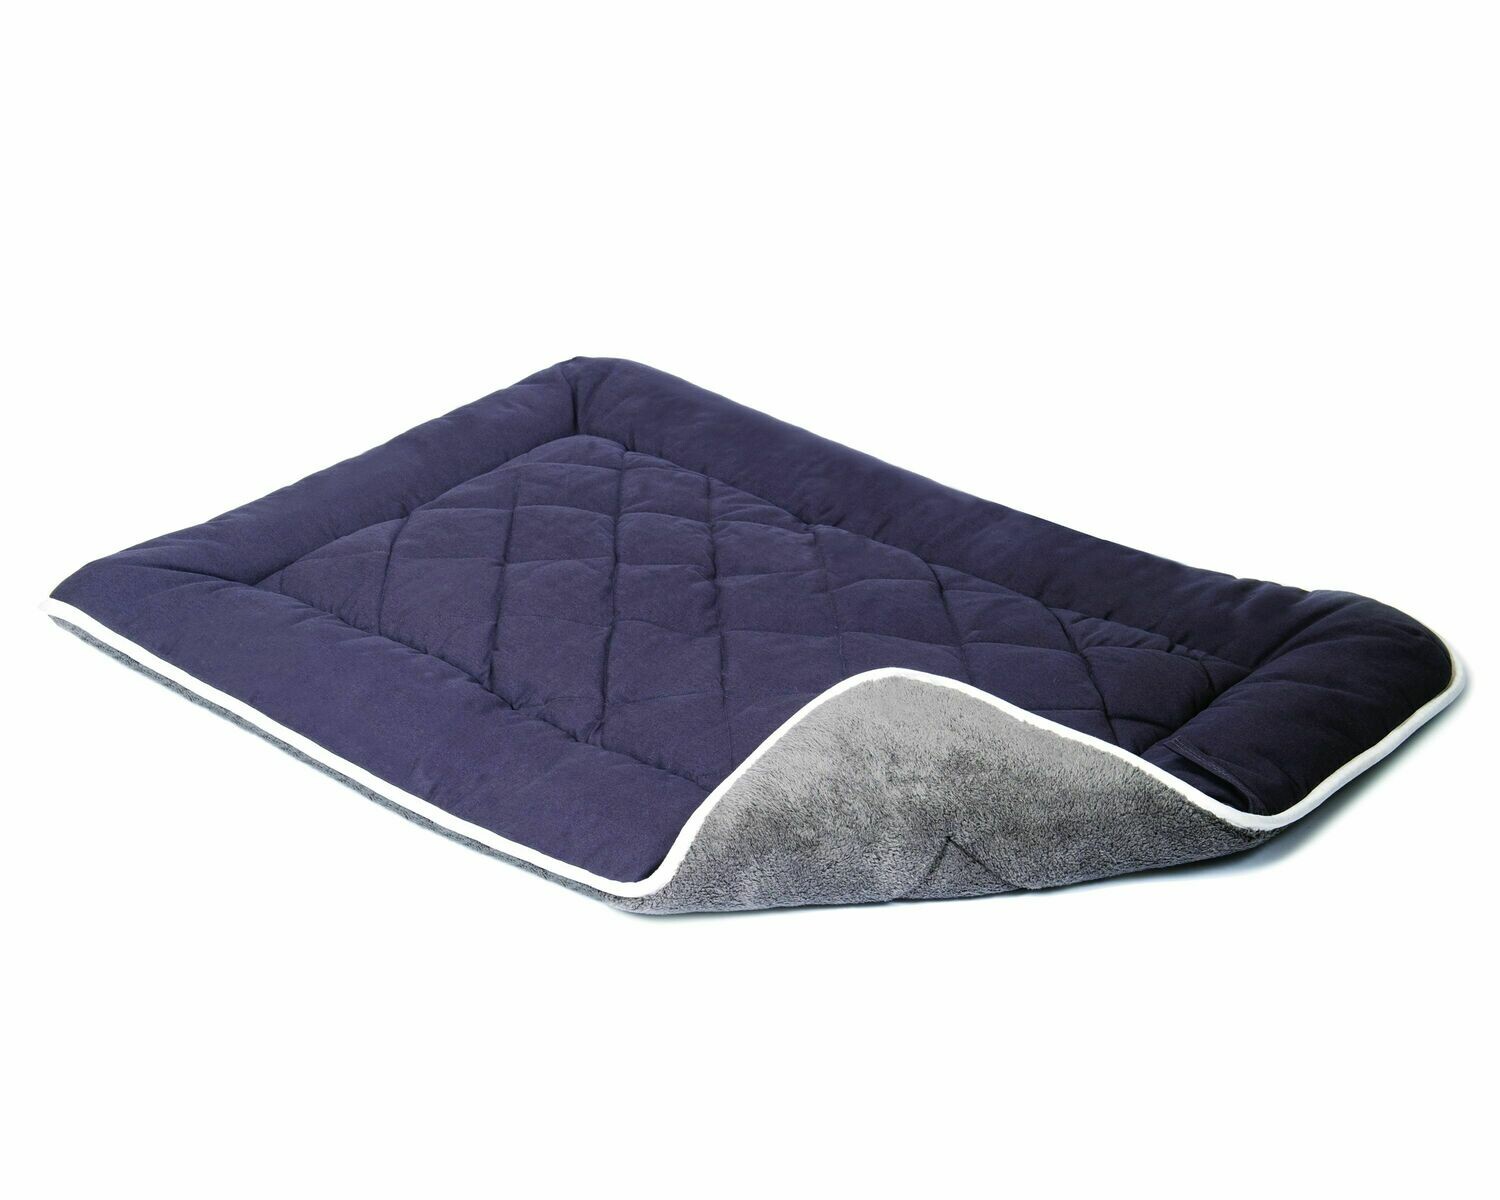 DGS Sleeper Cushion - Pebble Grey. (42"inch)